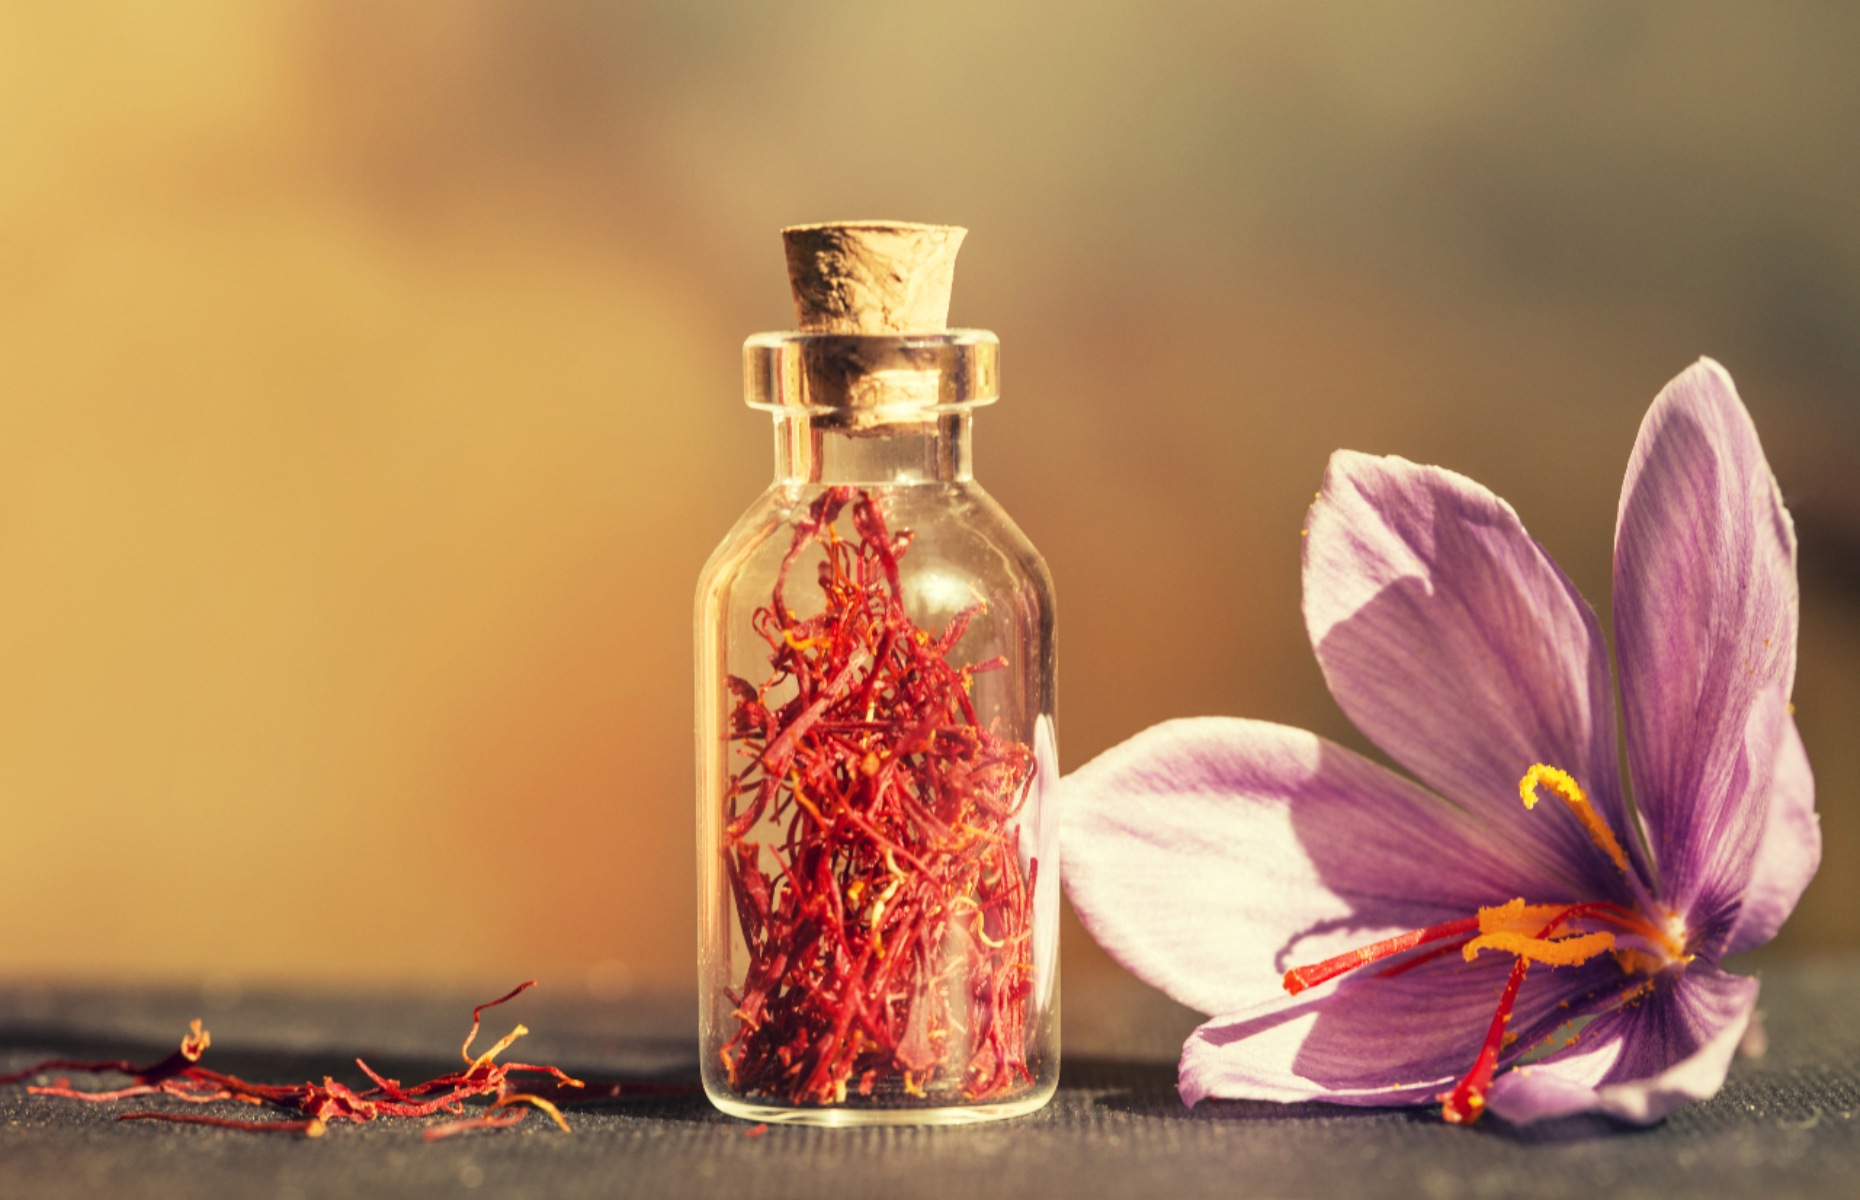 Saffron threads and flower (Image: Patricia Chumillas/Shutterstock)